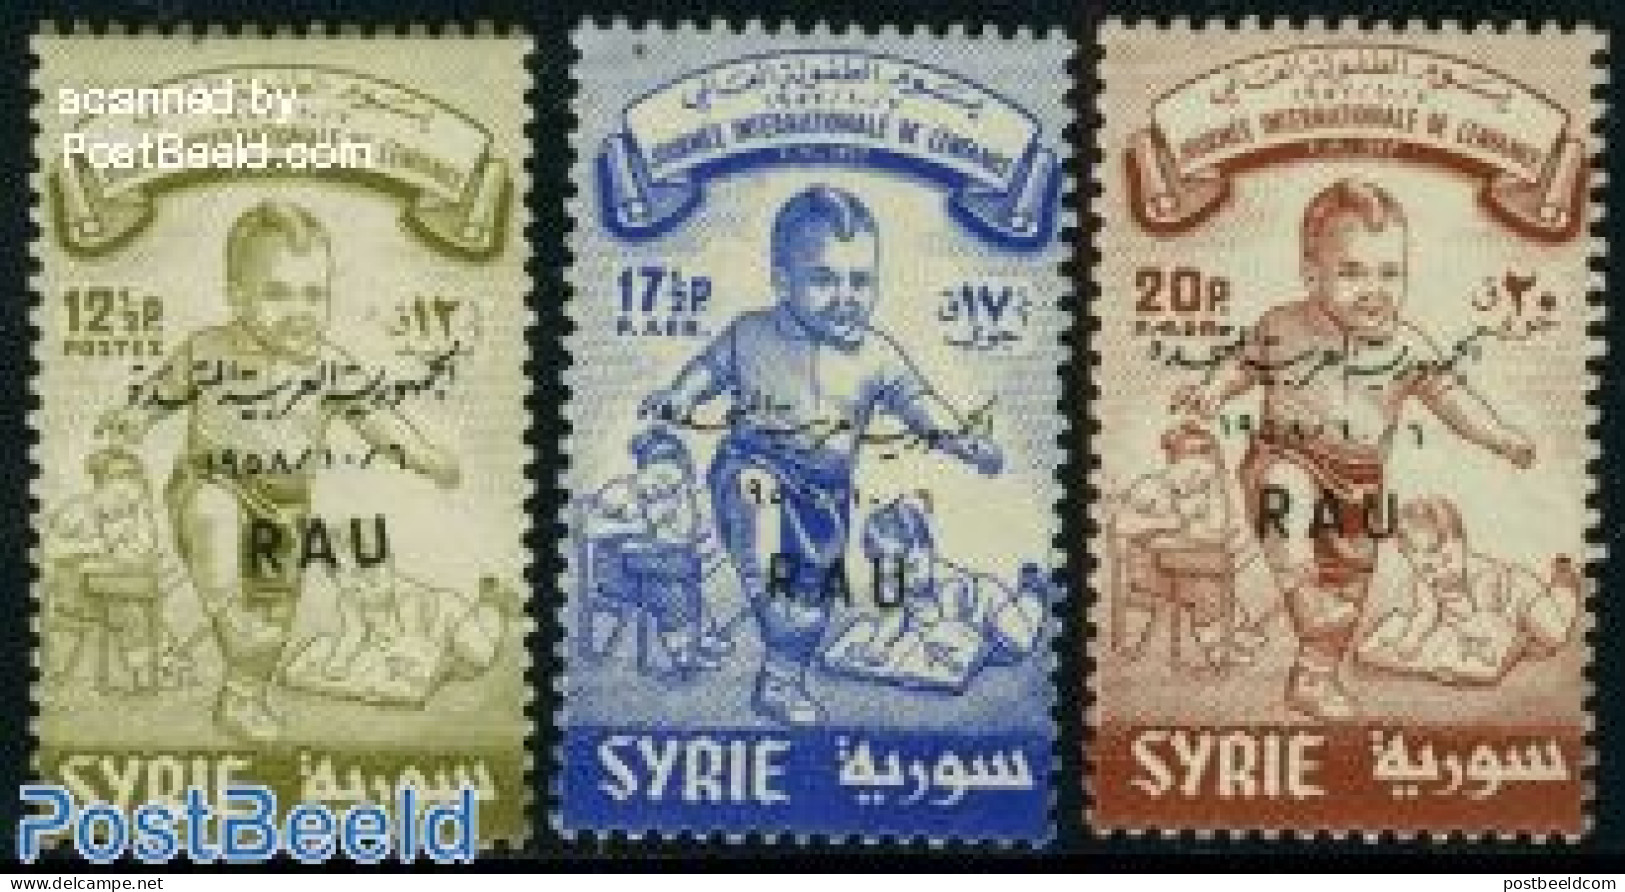 Syria 1958 Children Aid 3v, Mint NH - Syrie